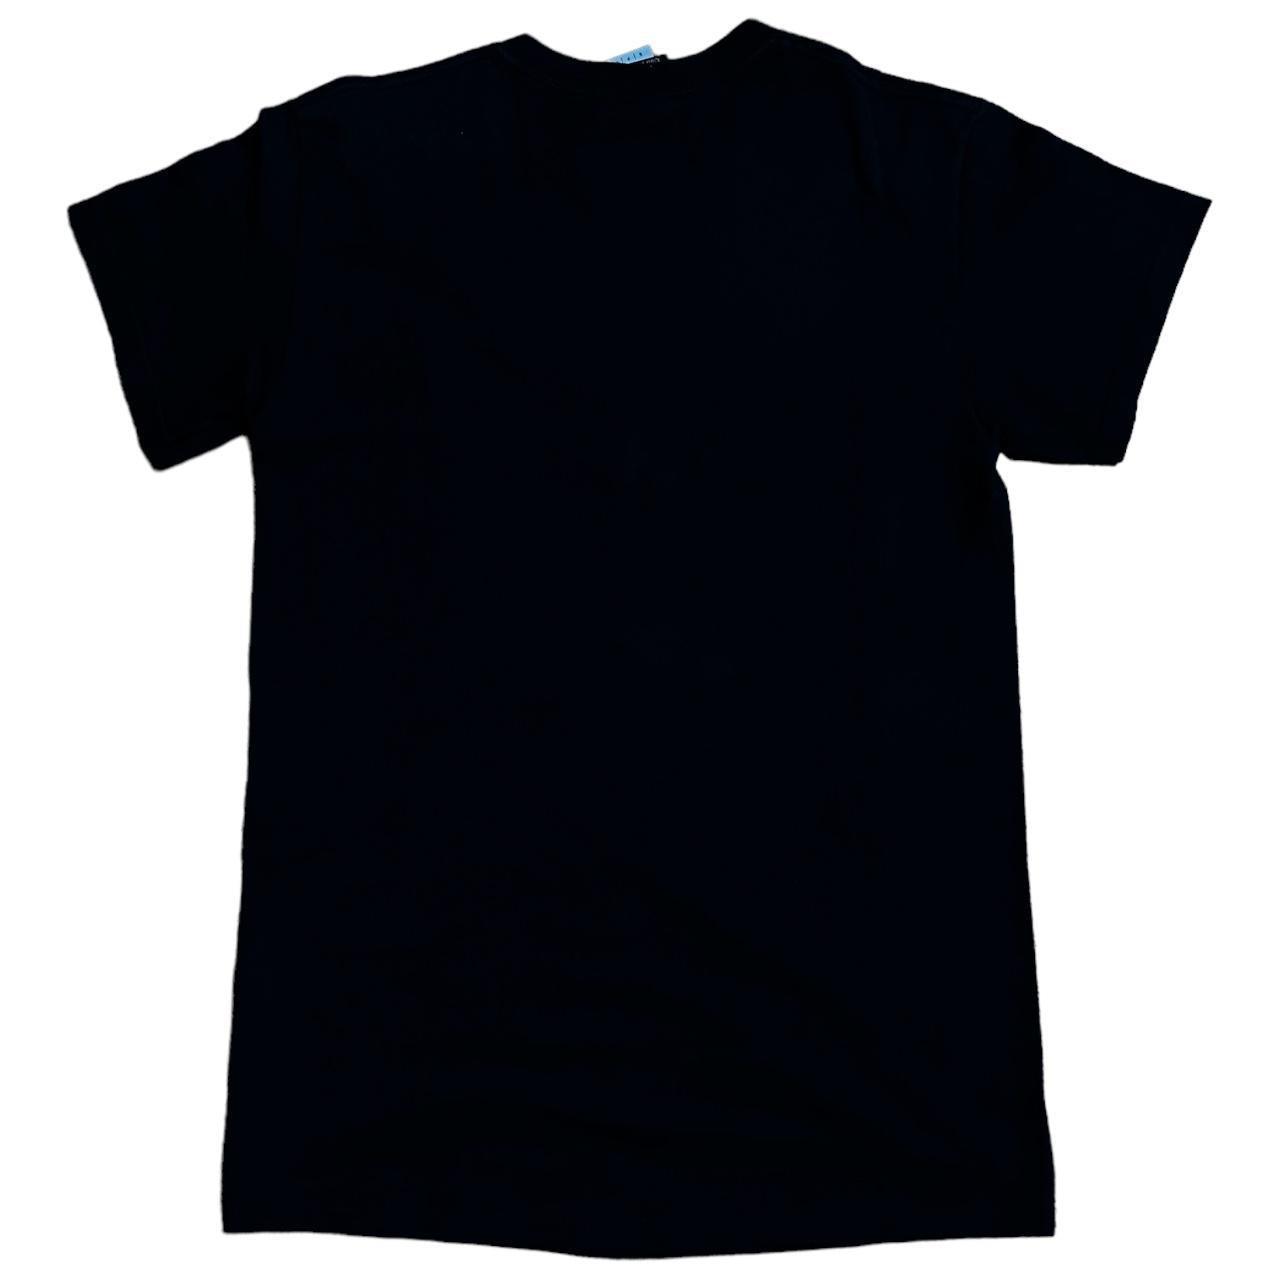 Thrasher print T-shirt short sleeve black - Known Source